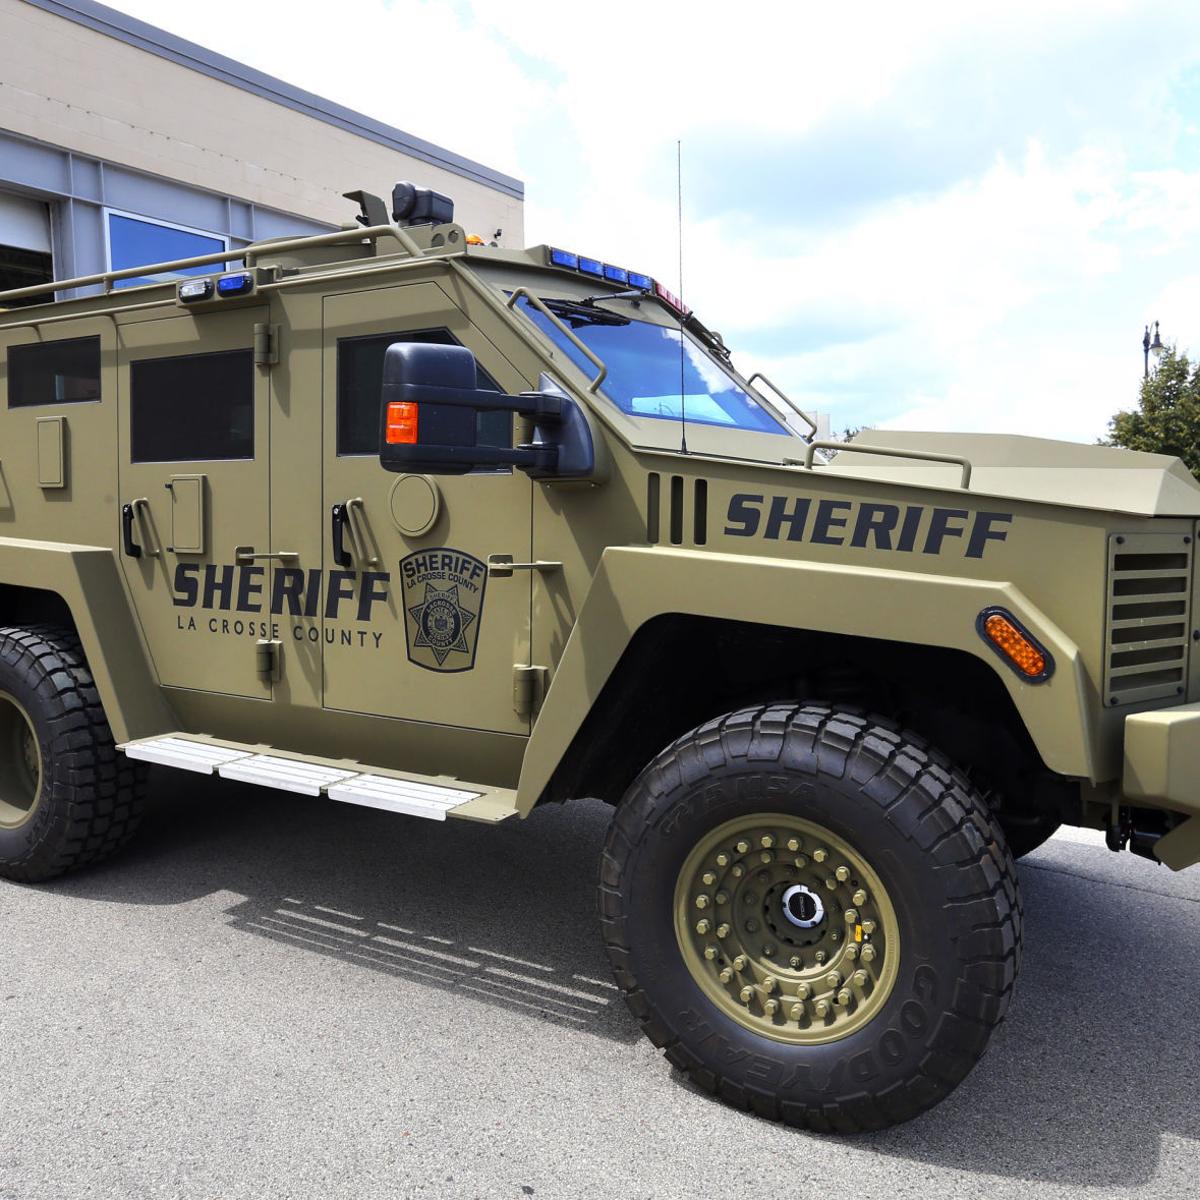 La Crosse Sheriff S Department Acquires New Bearcat Local News Lacrossetribune Com